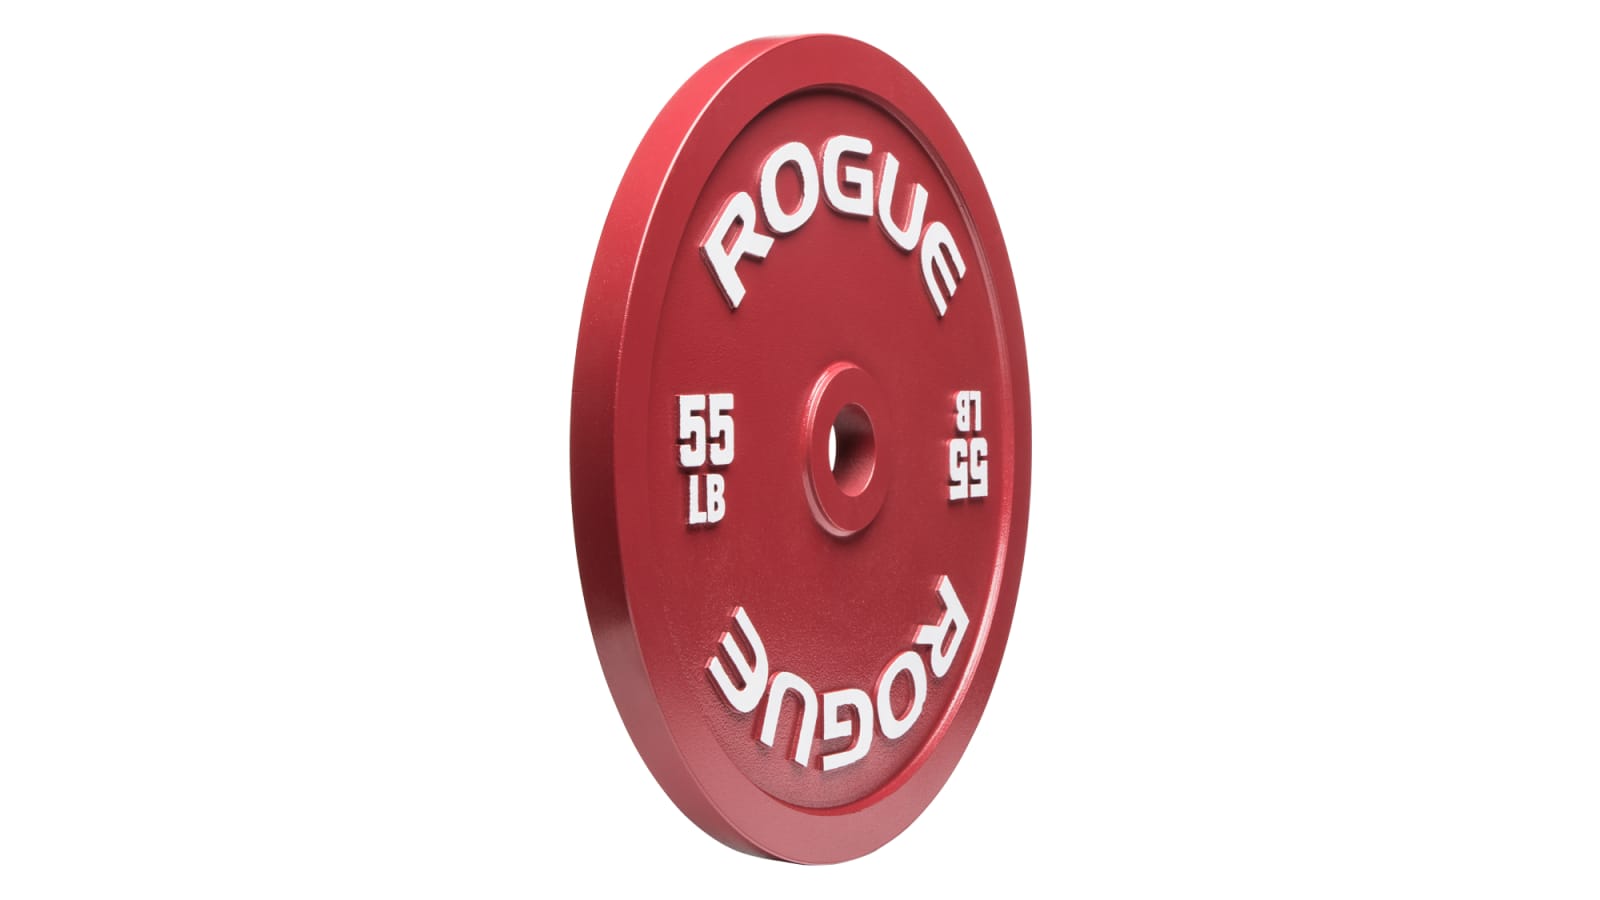 Rogue Calibrated LB | Rogue Fitness